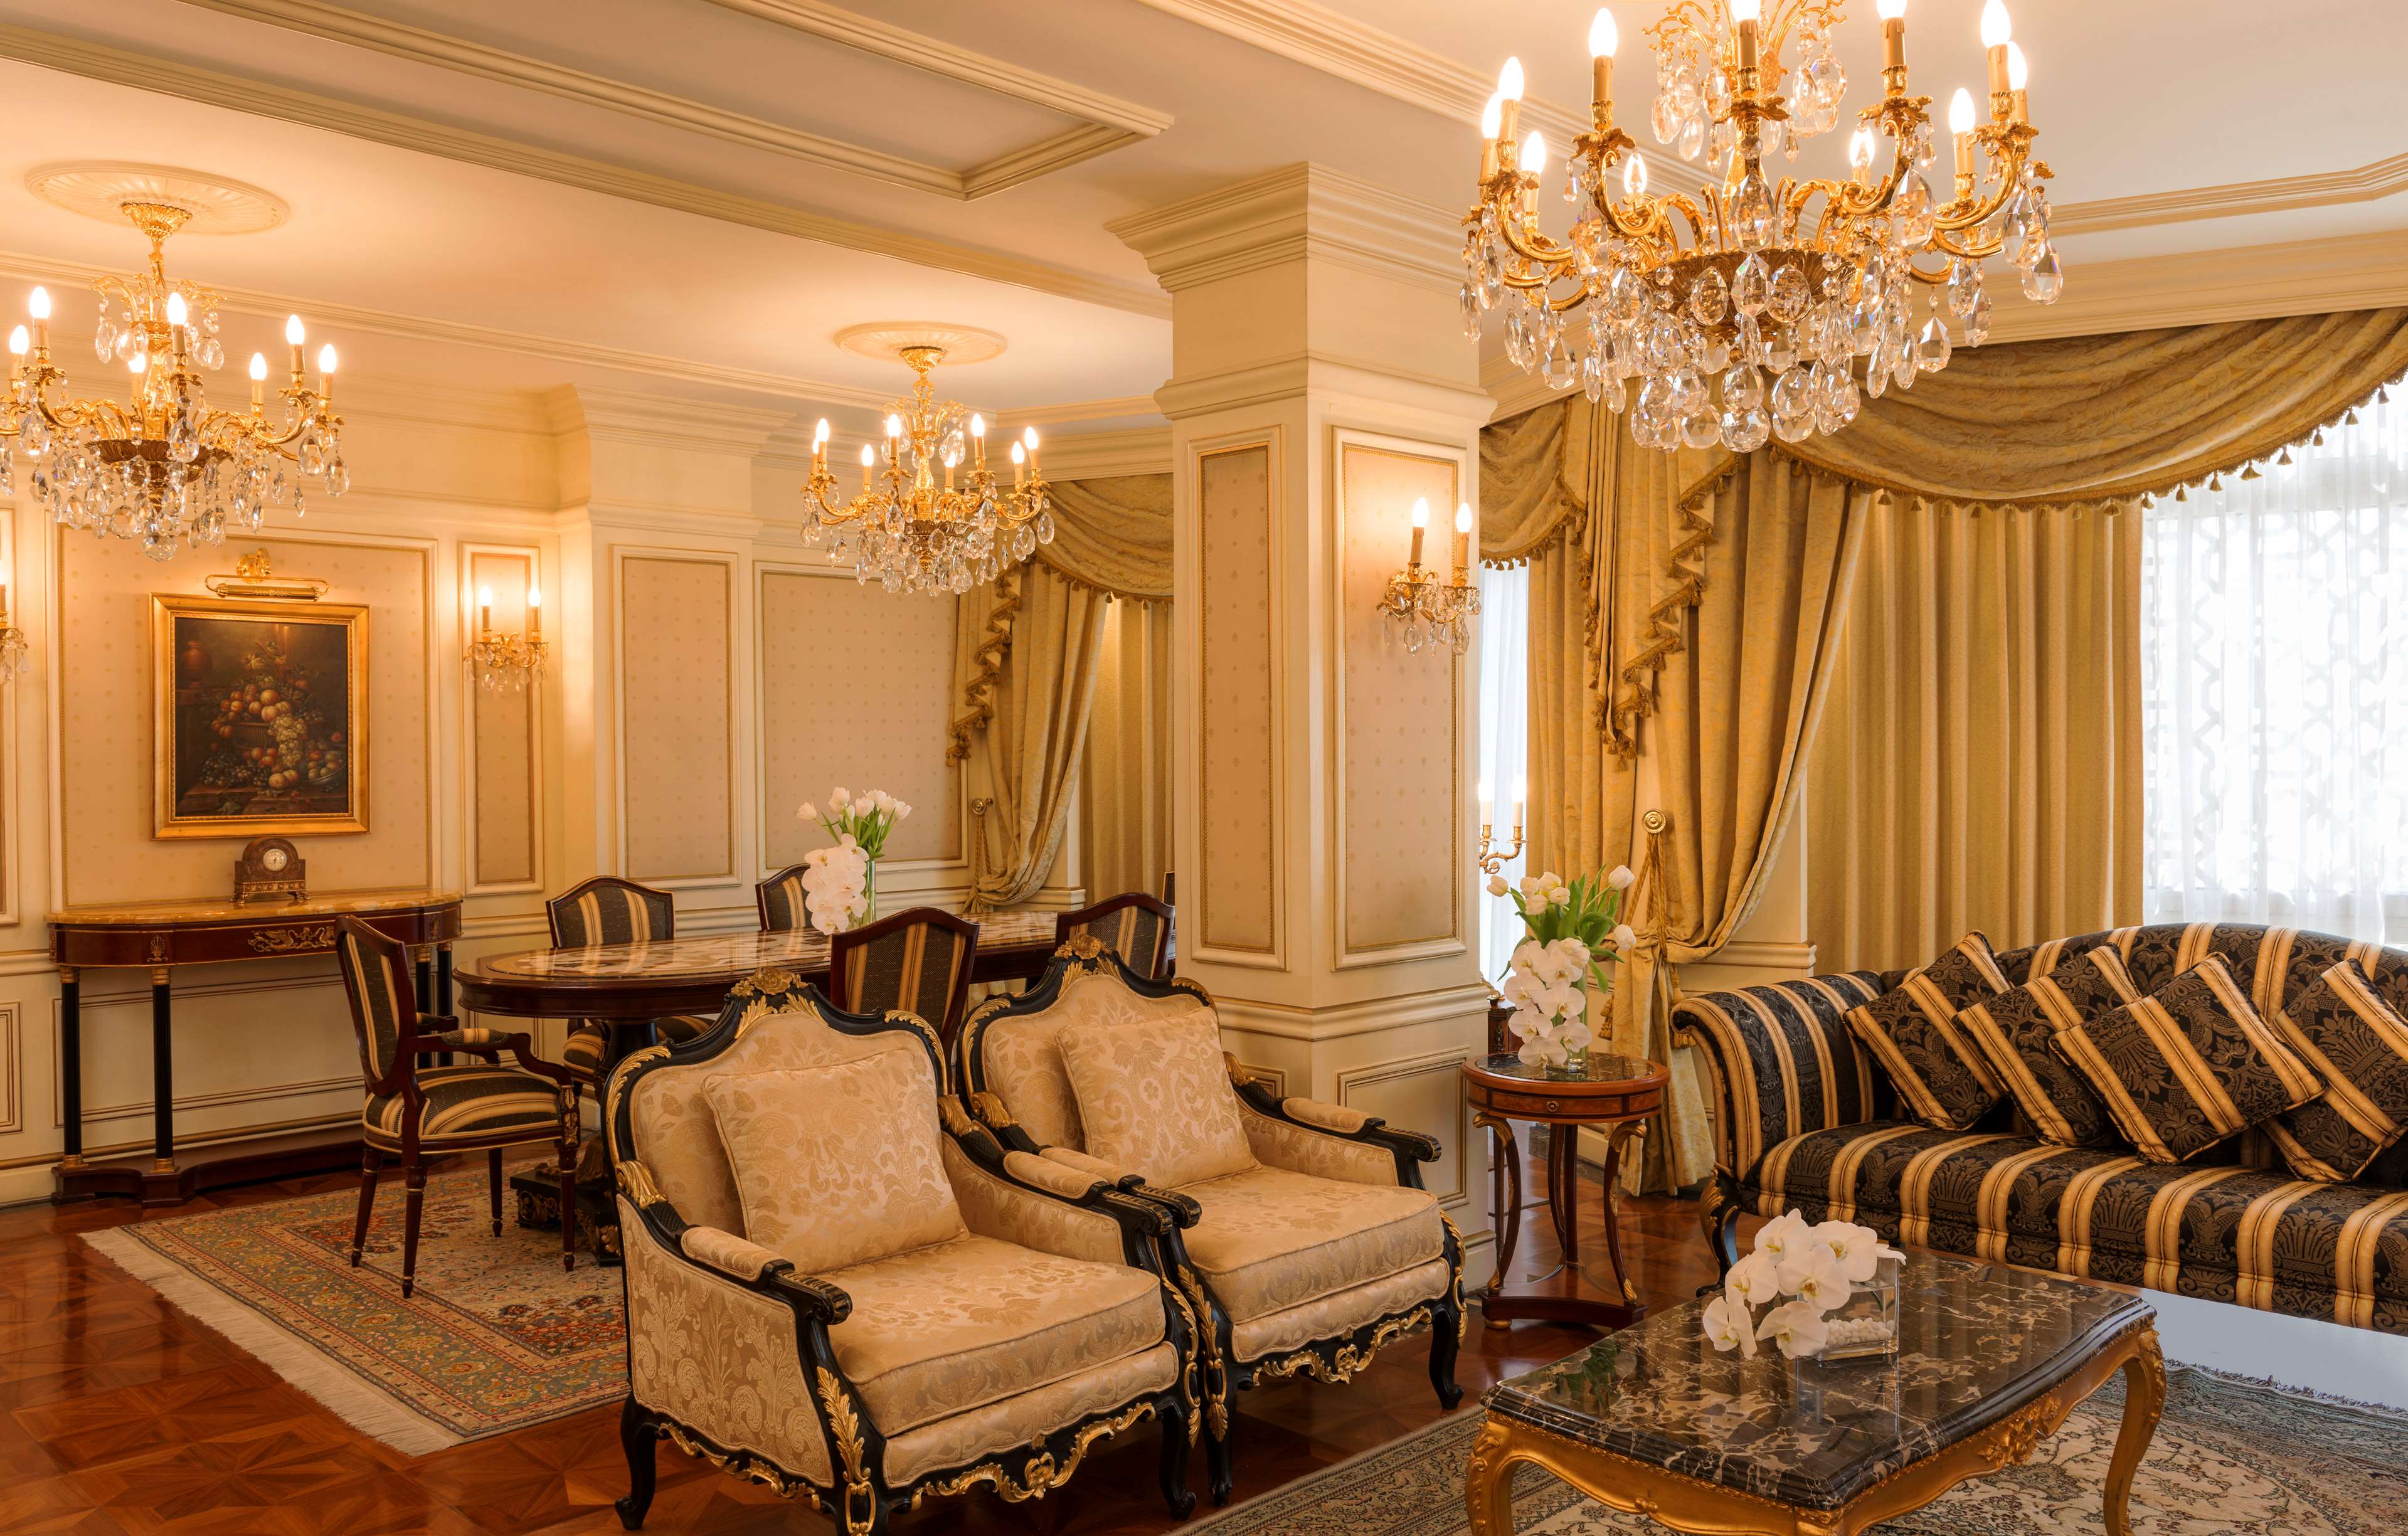 Sheraton Kuwait, a Luxury Collection Hotel